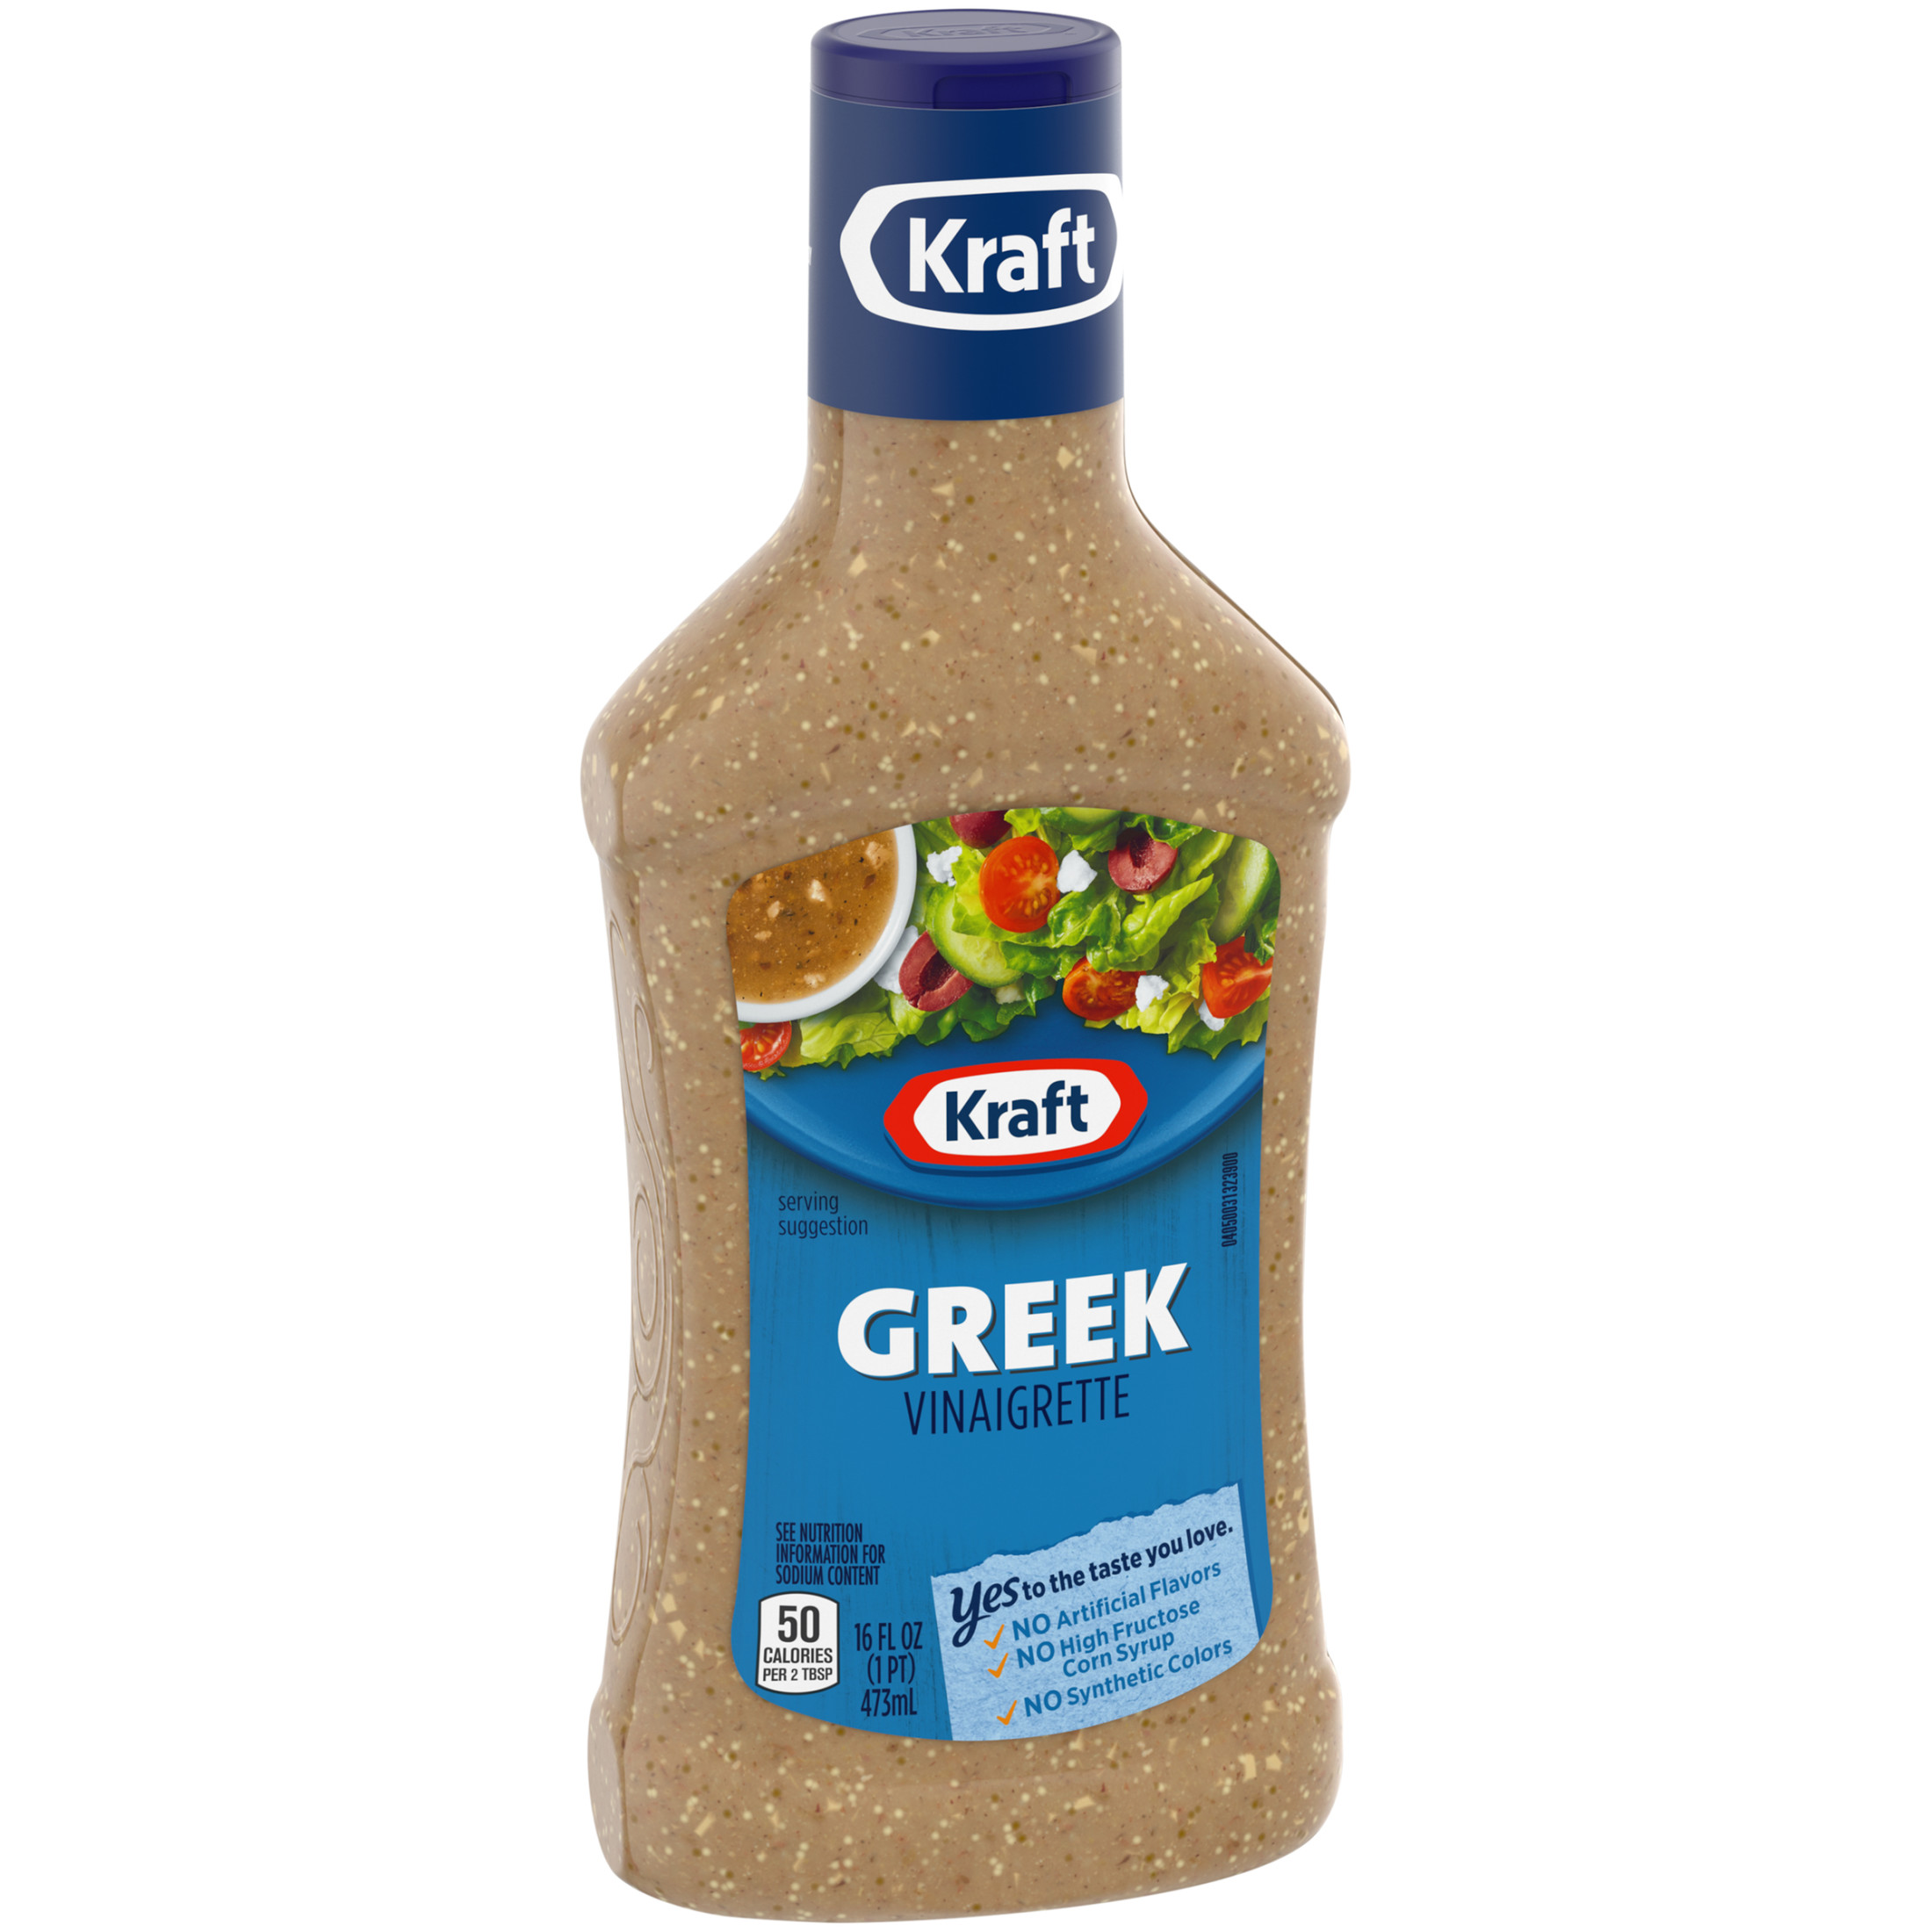 Kraft Greek Vinaigrette Salad Dressing, 16 fl oz Bottle - image 3 of 6